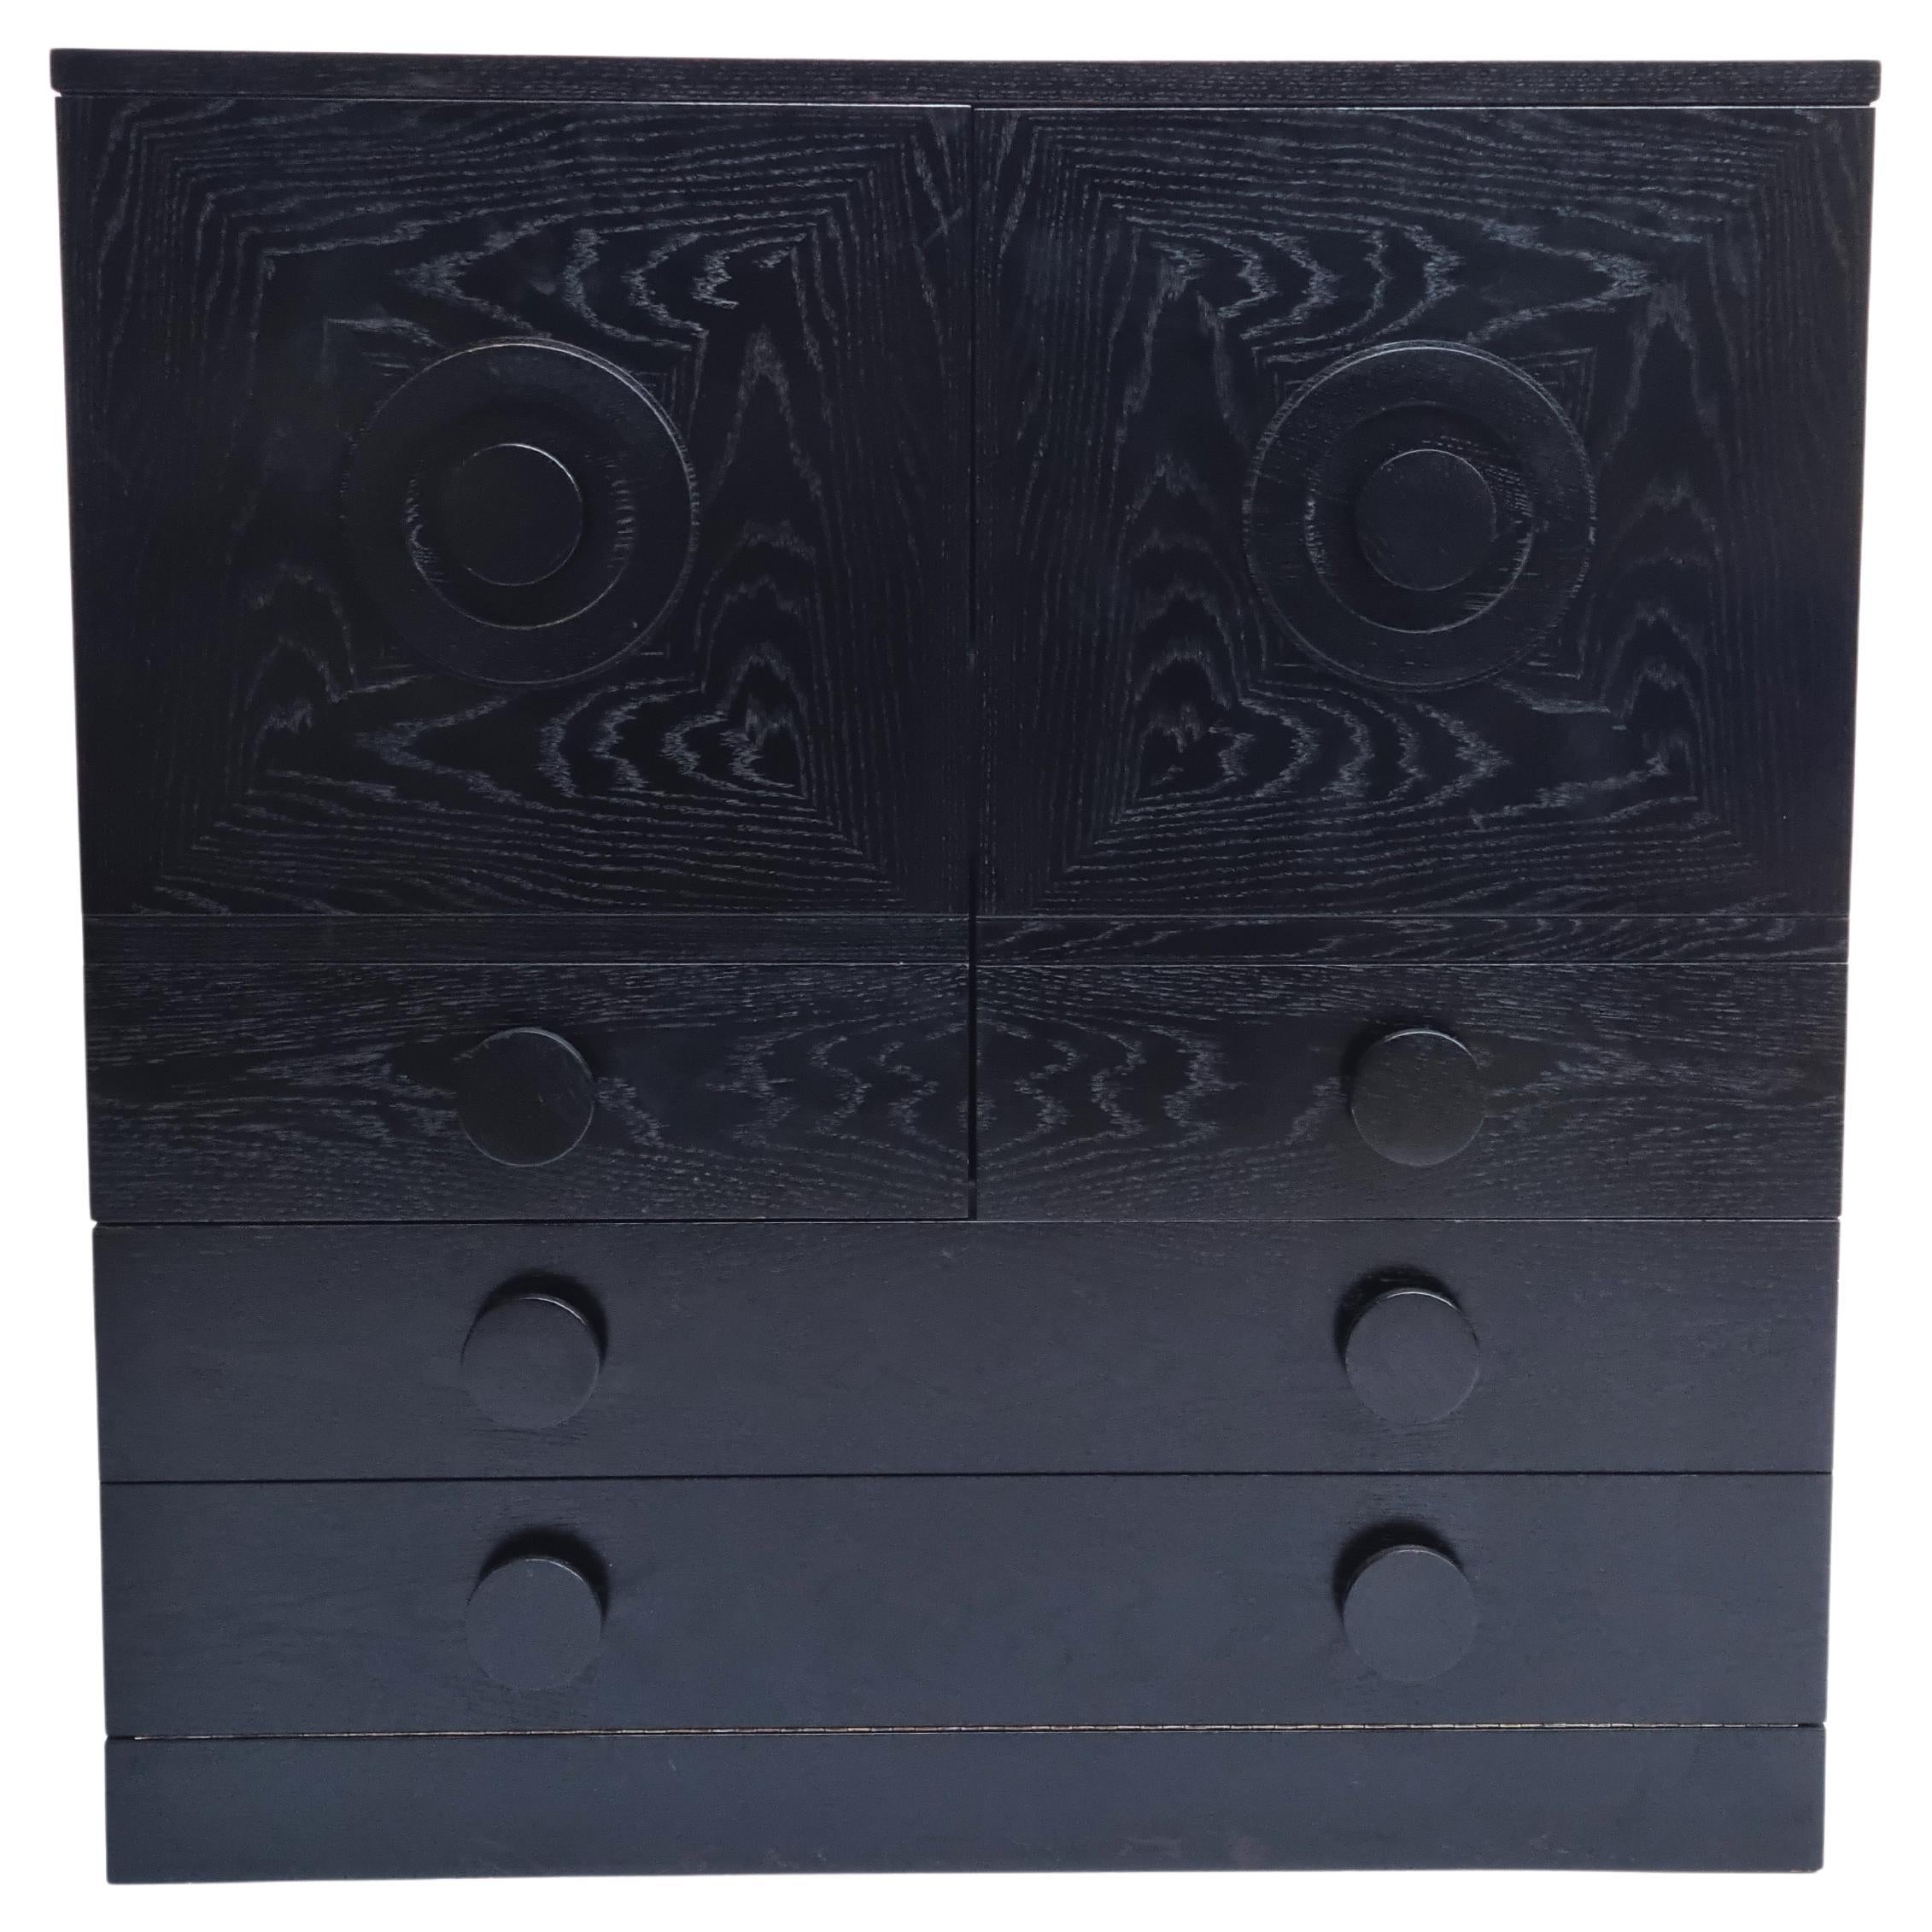 Black Brutalist Cabinet, Three Graphic Patterned Doors, Belgium, 1970s For Sale